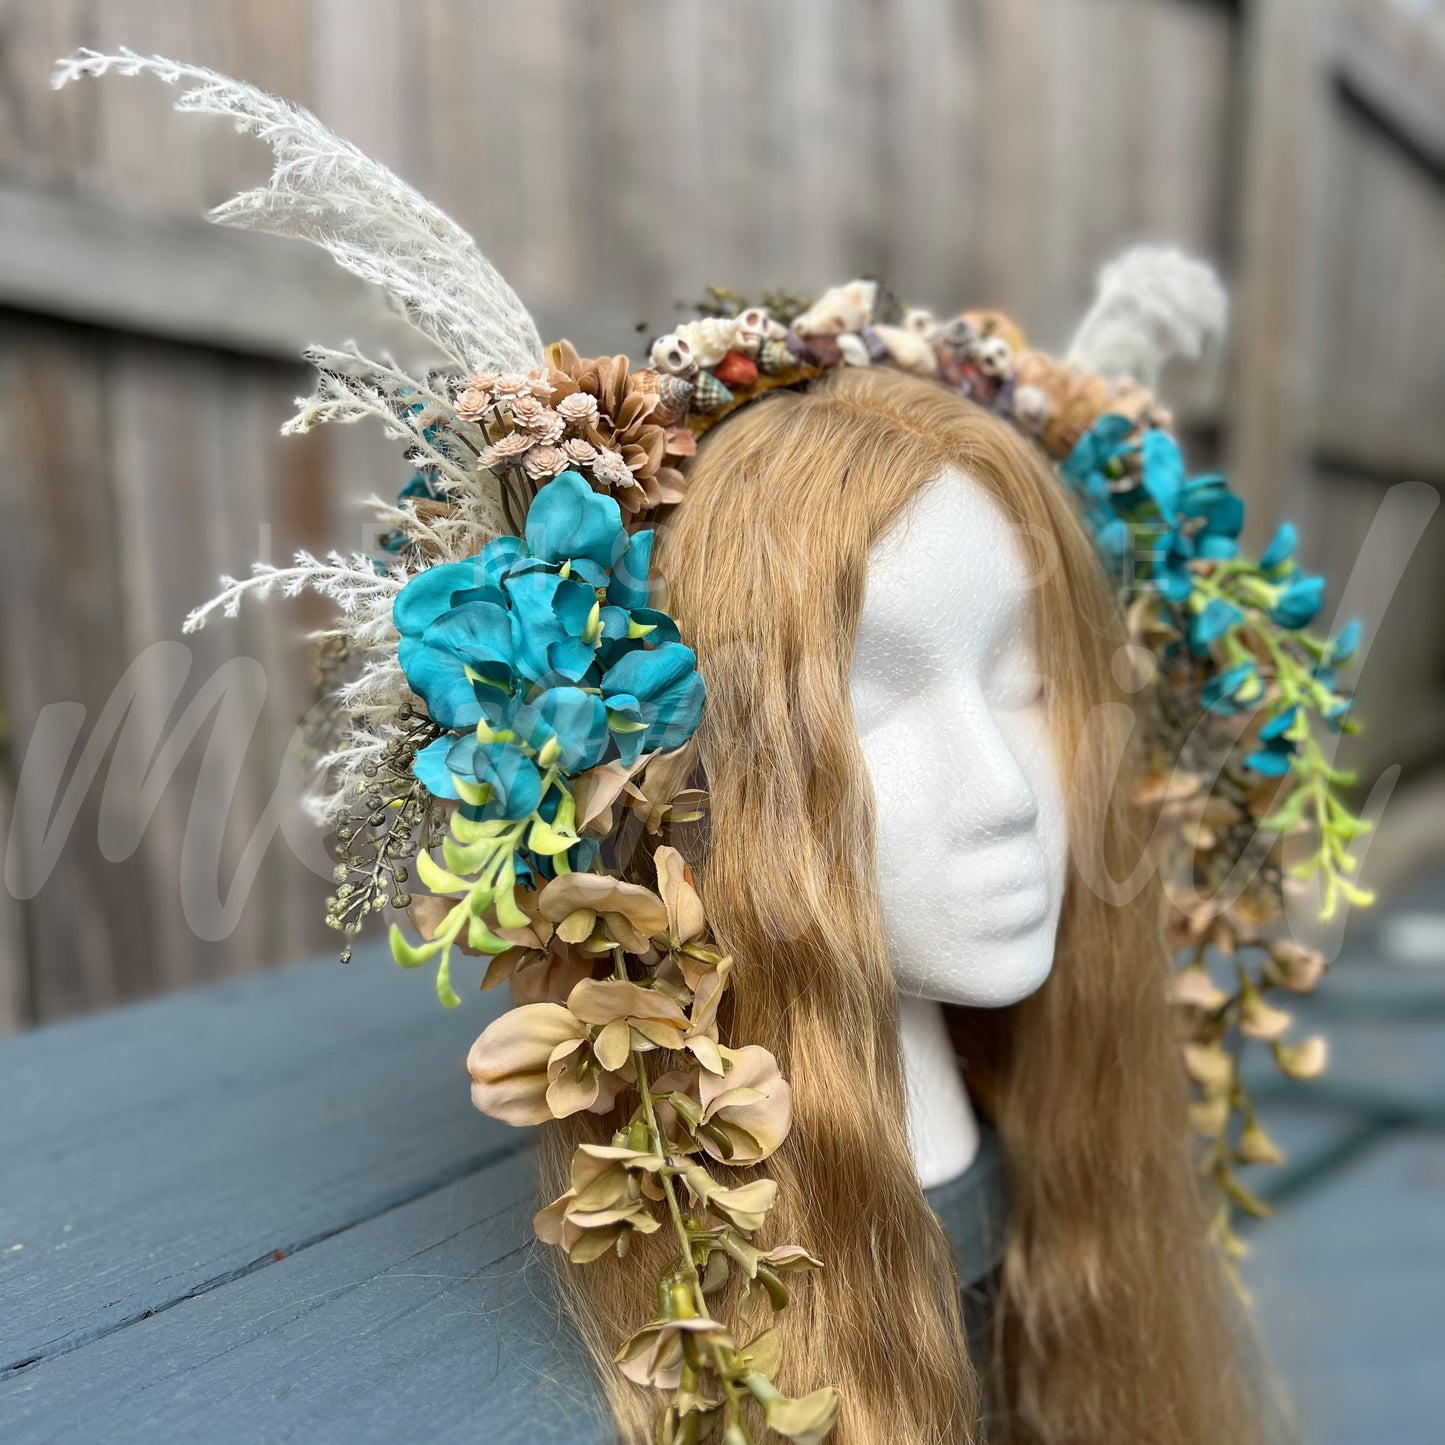 Custom Mermaid or Fairy Headdress